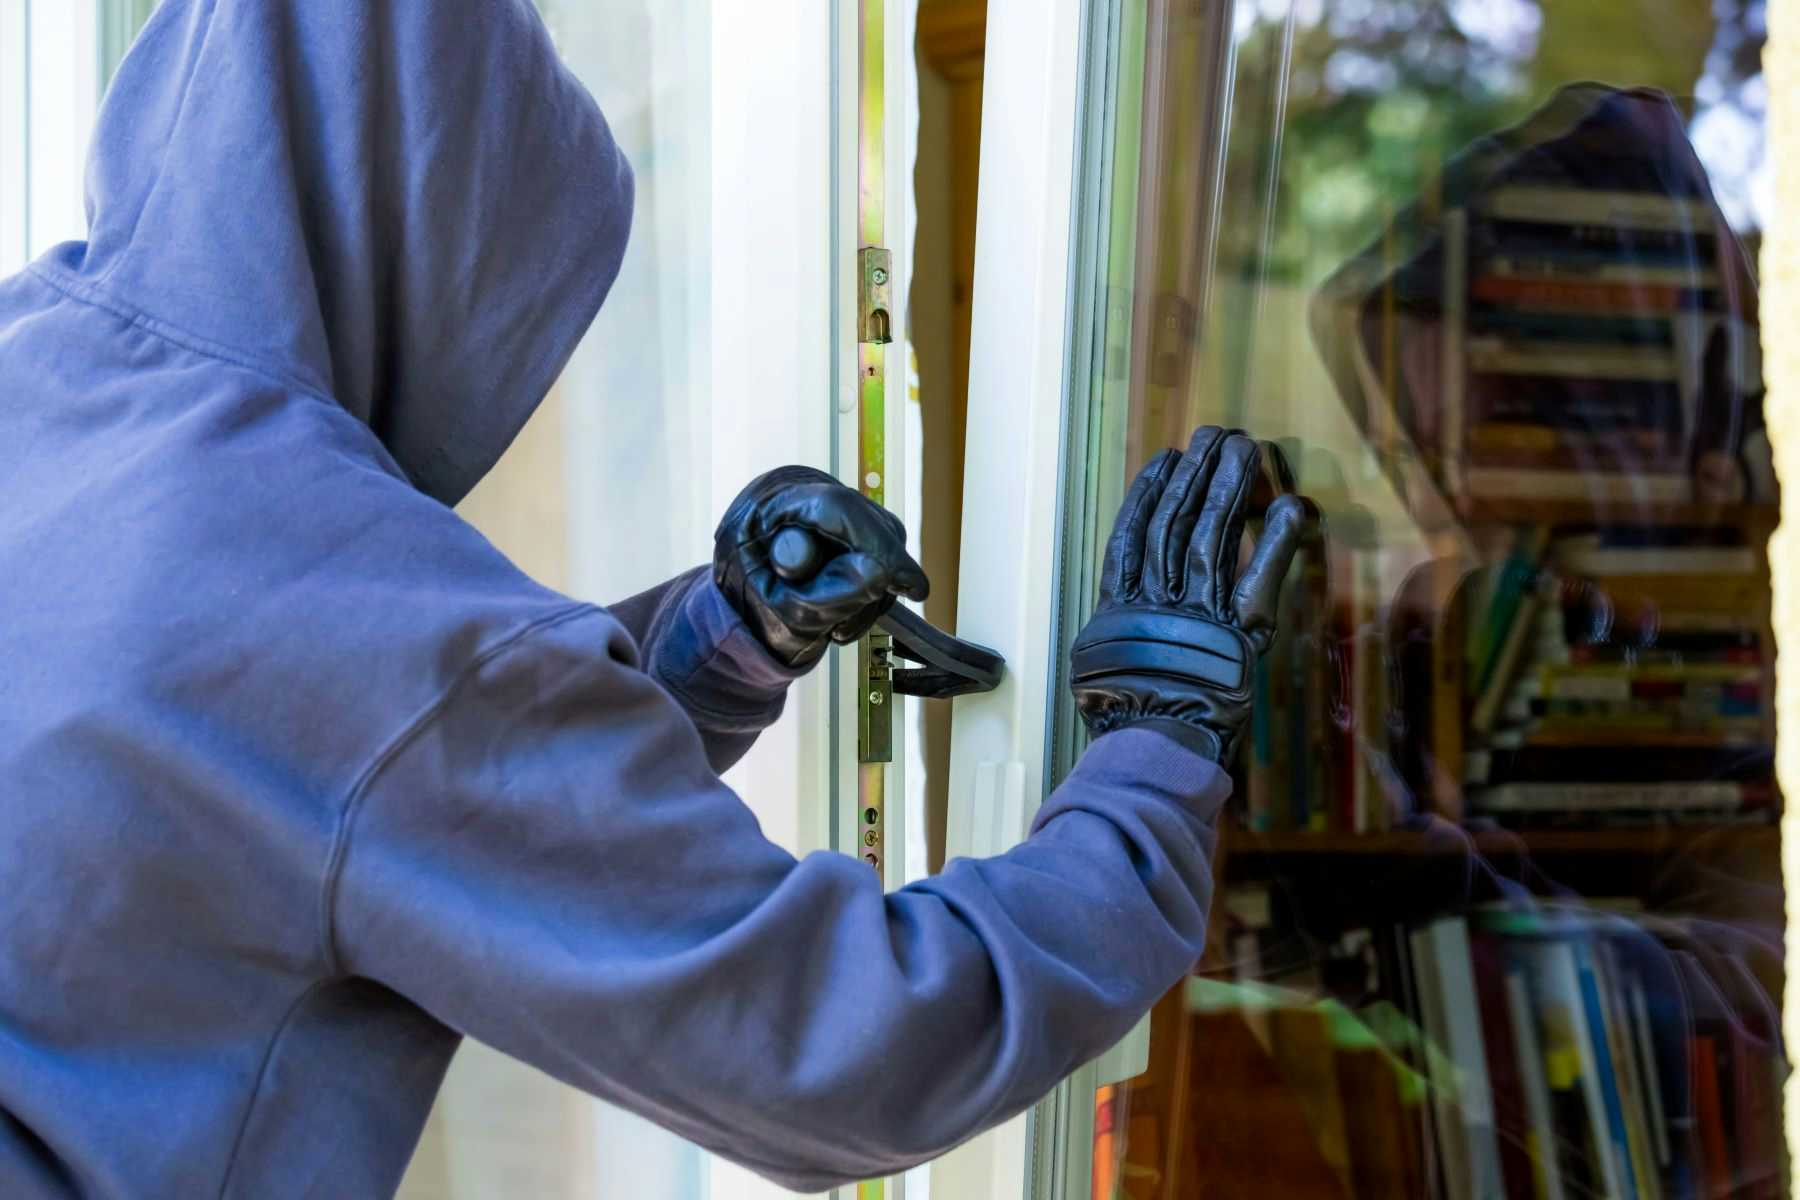 Burglar breaking into home